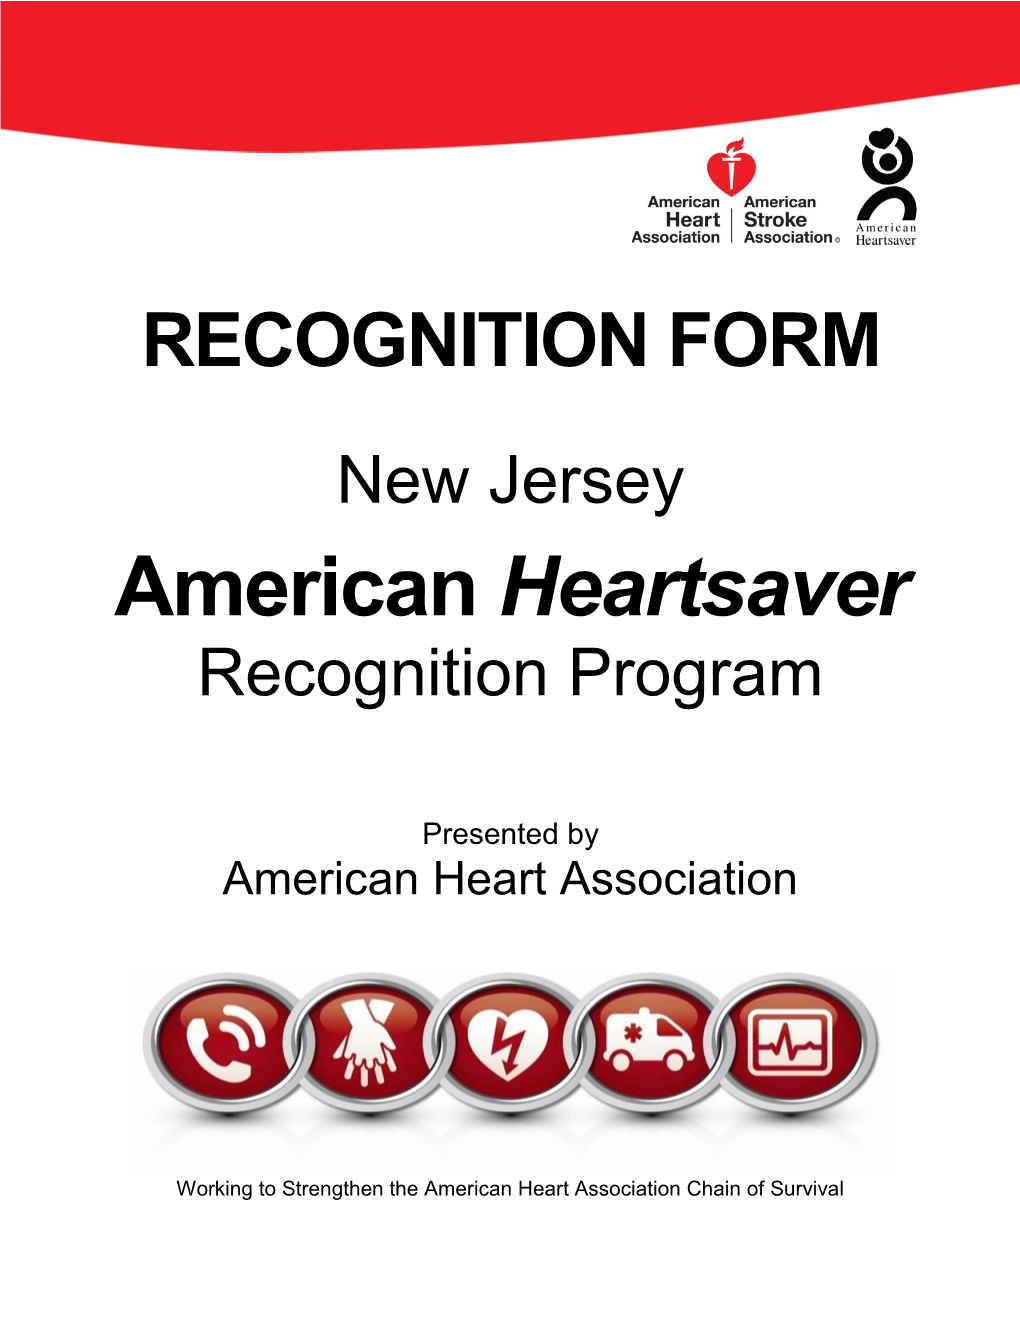 American Heartsaver Recognition Program